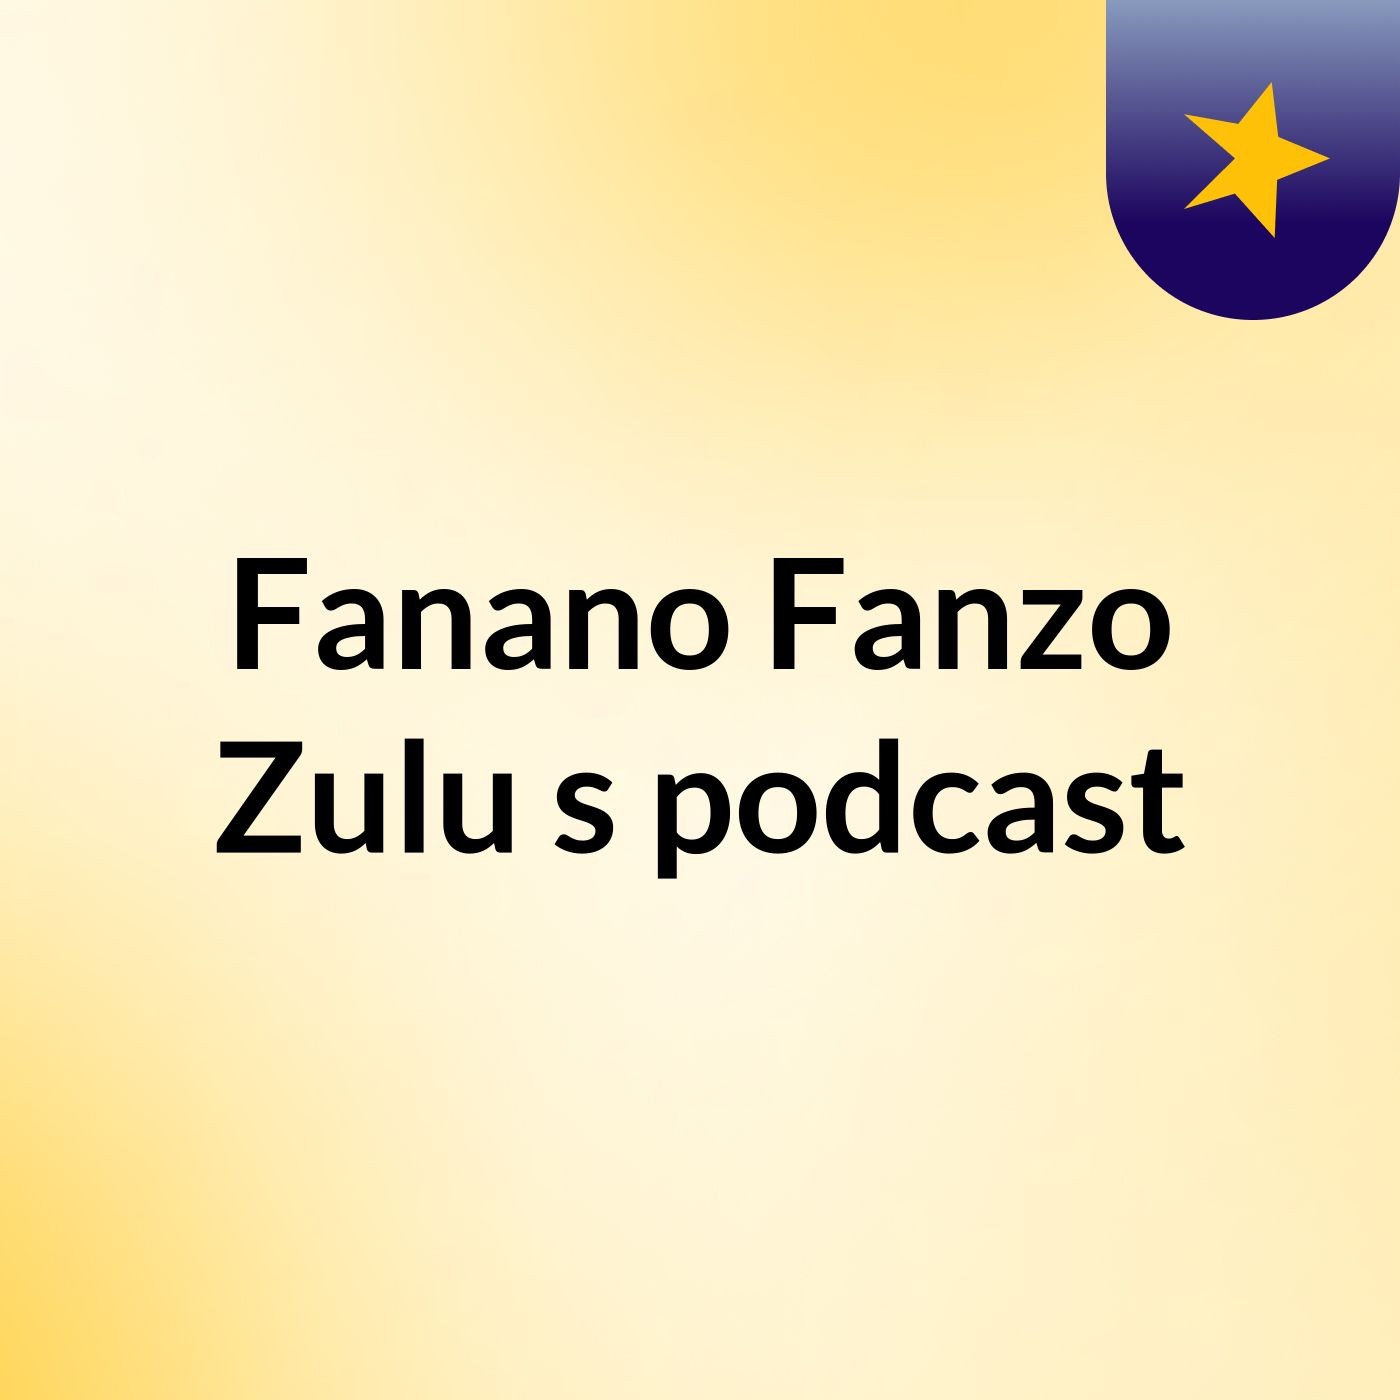 Fanano Fanzo Zulu's podcast